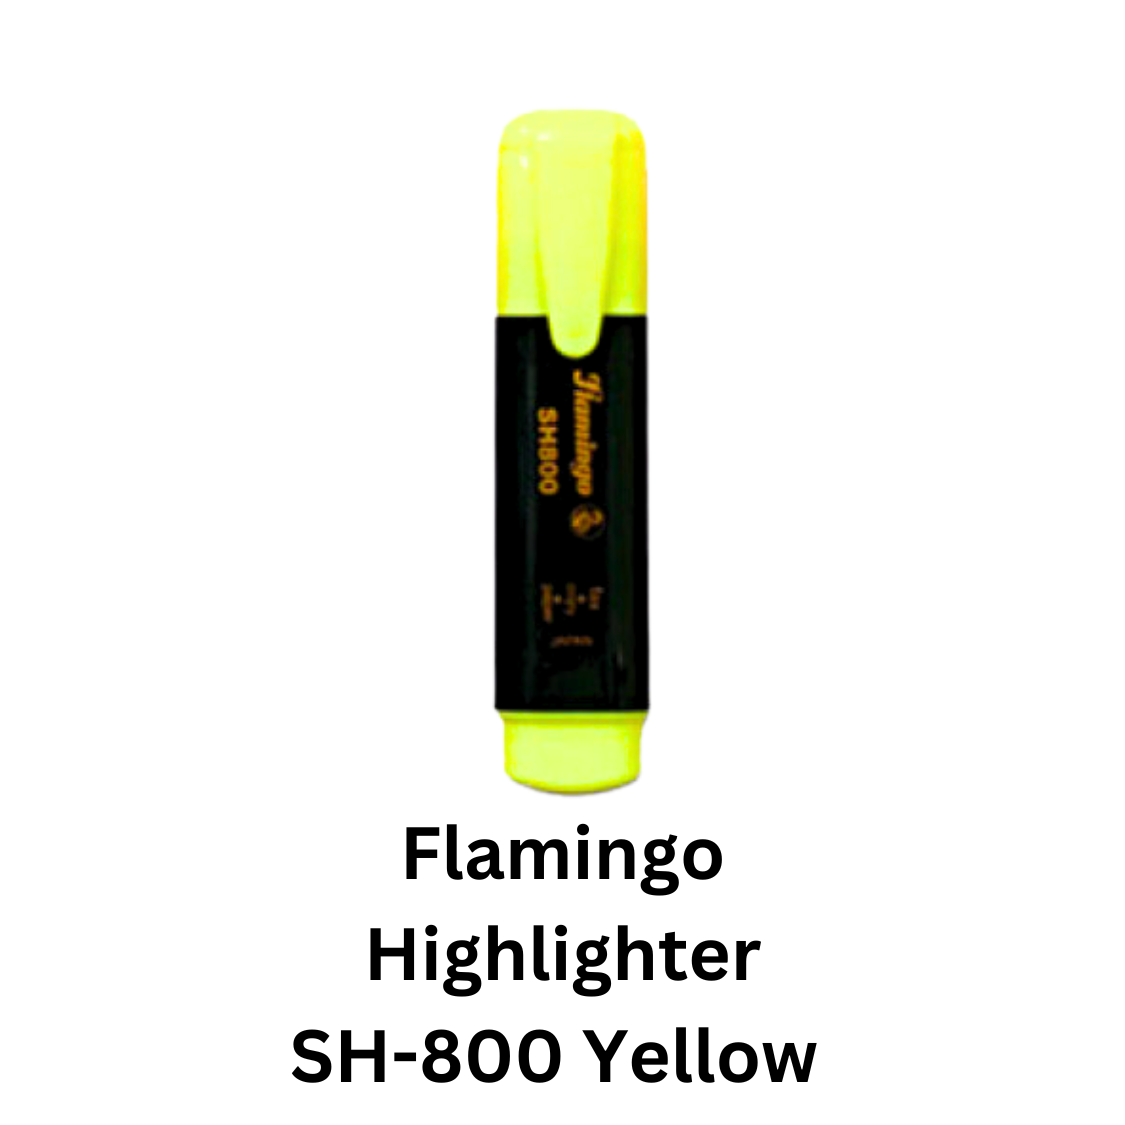 Flamingo Highlighter SH-800 Yellow 1x10 pcs - YOUTOO TRADING 